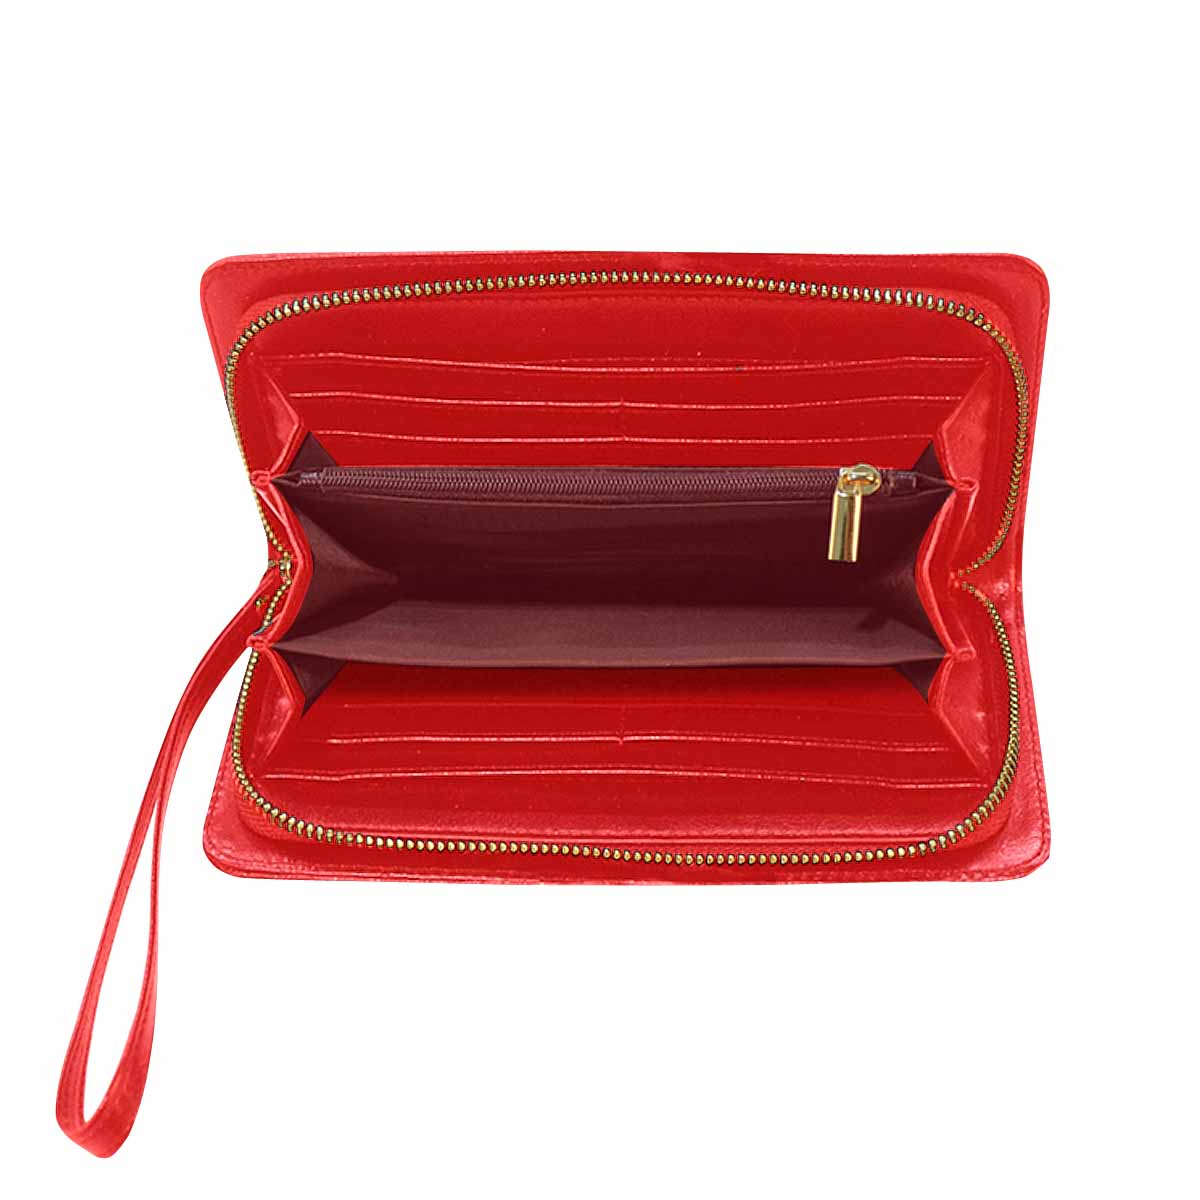 Victorian lace print womens wallet, clutch purse, red trim, design 09